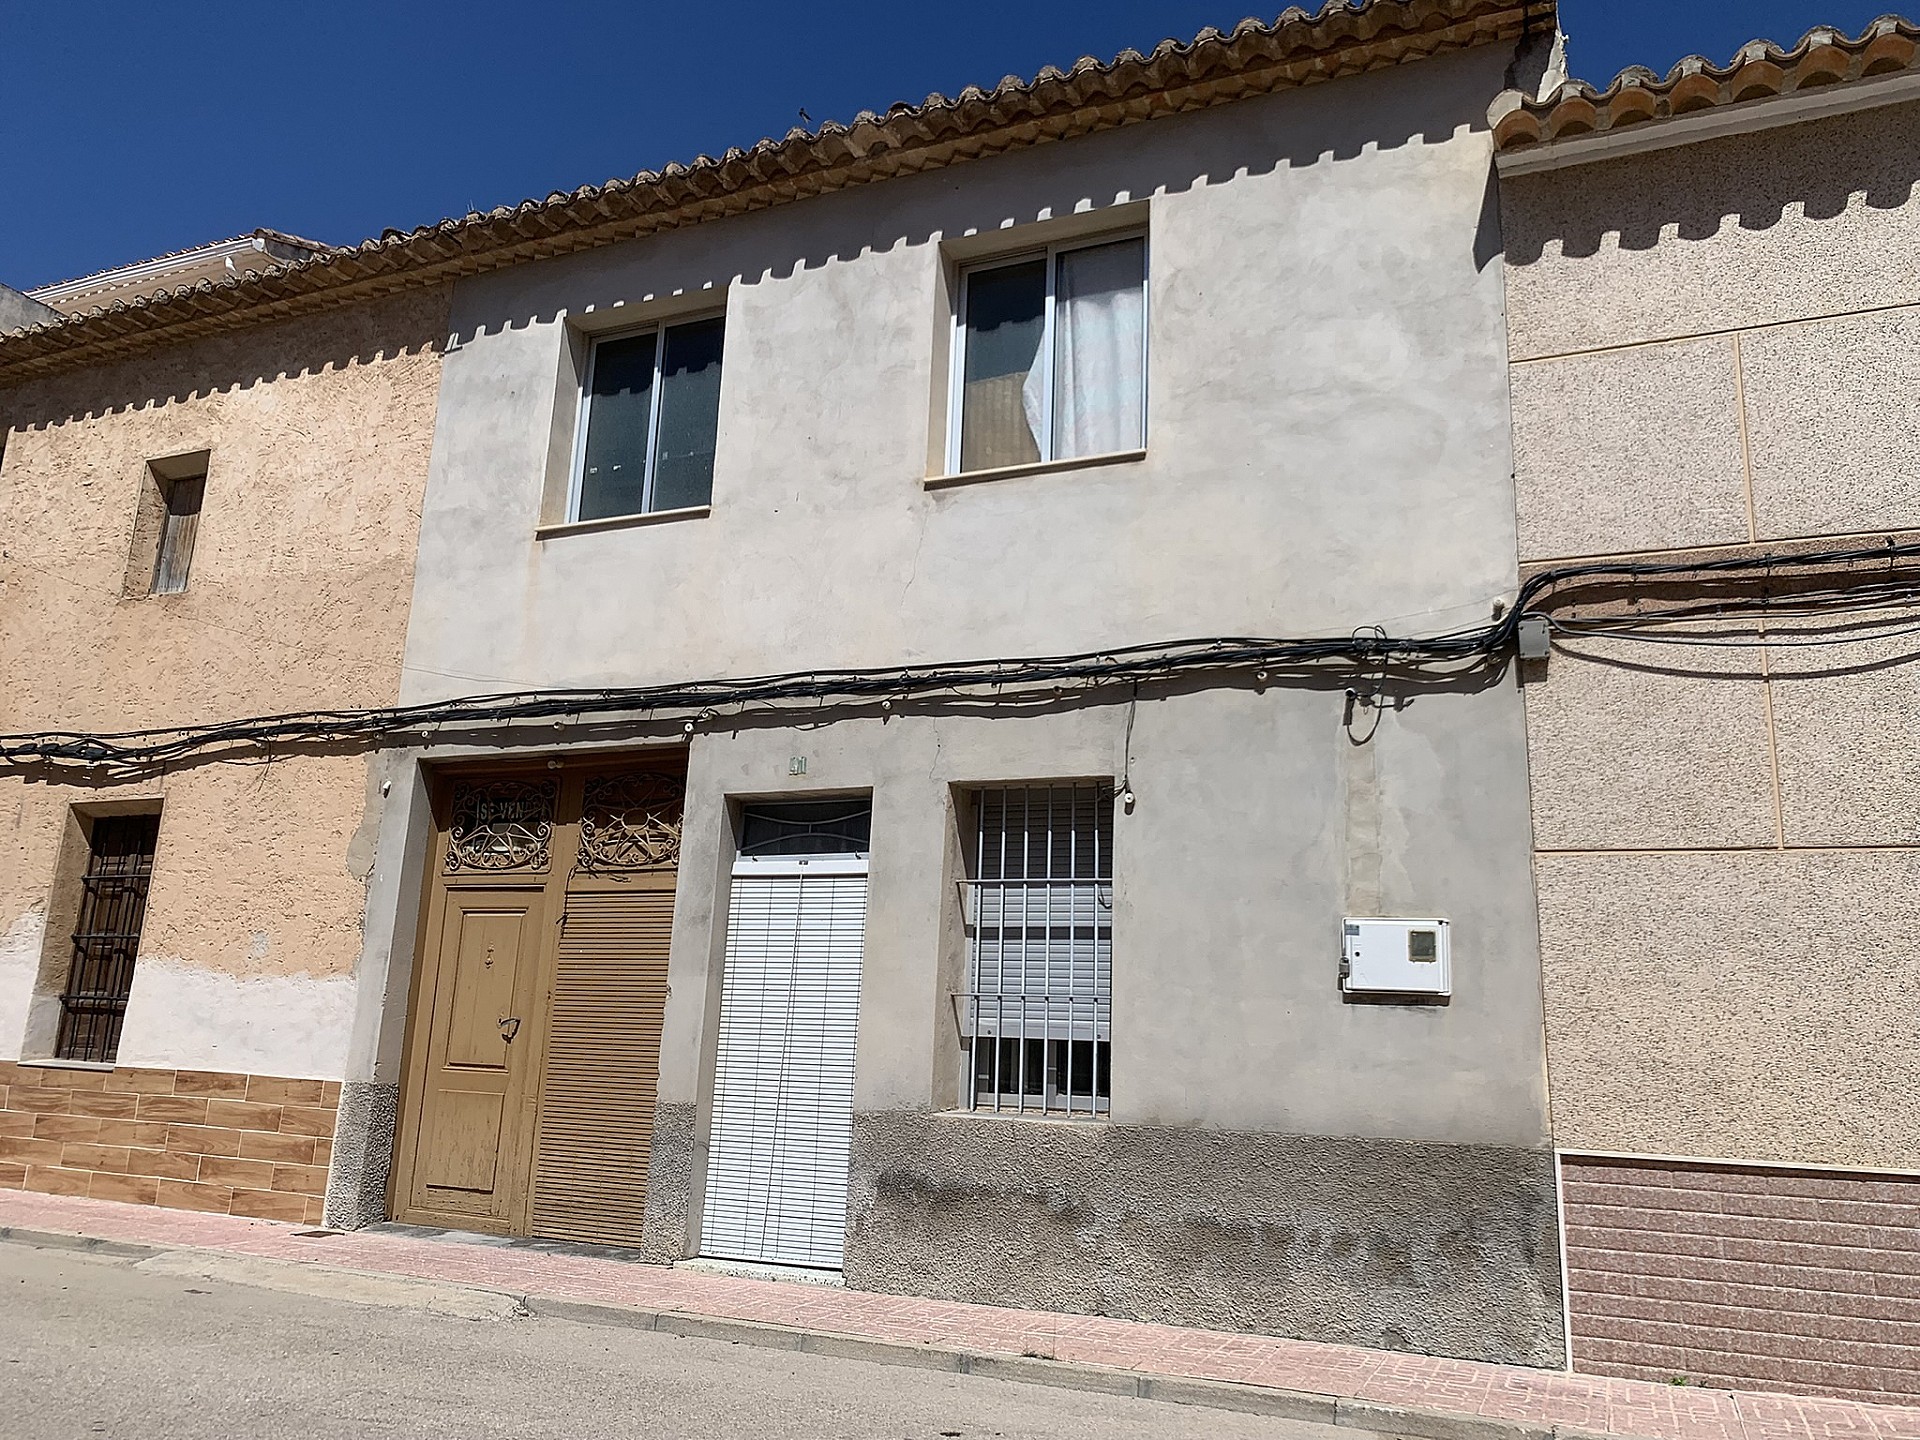 3 bedroom house / villa for sale in Caudete, Costa Blanca